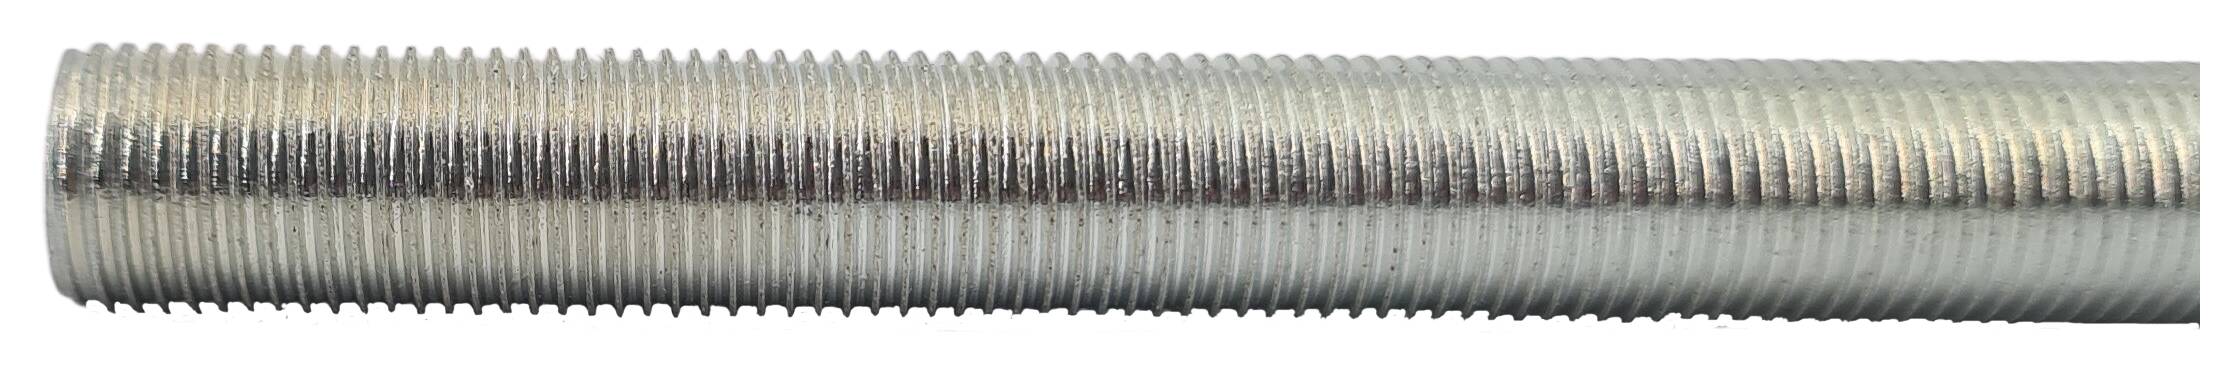 iron thread tube M10x1x275 round zinc